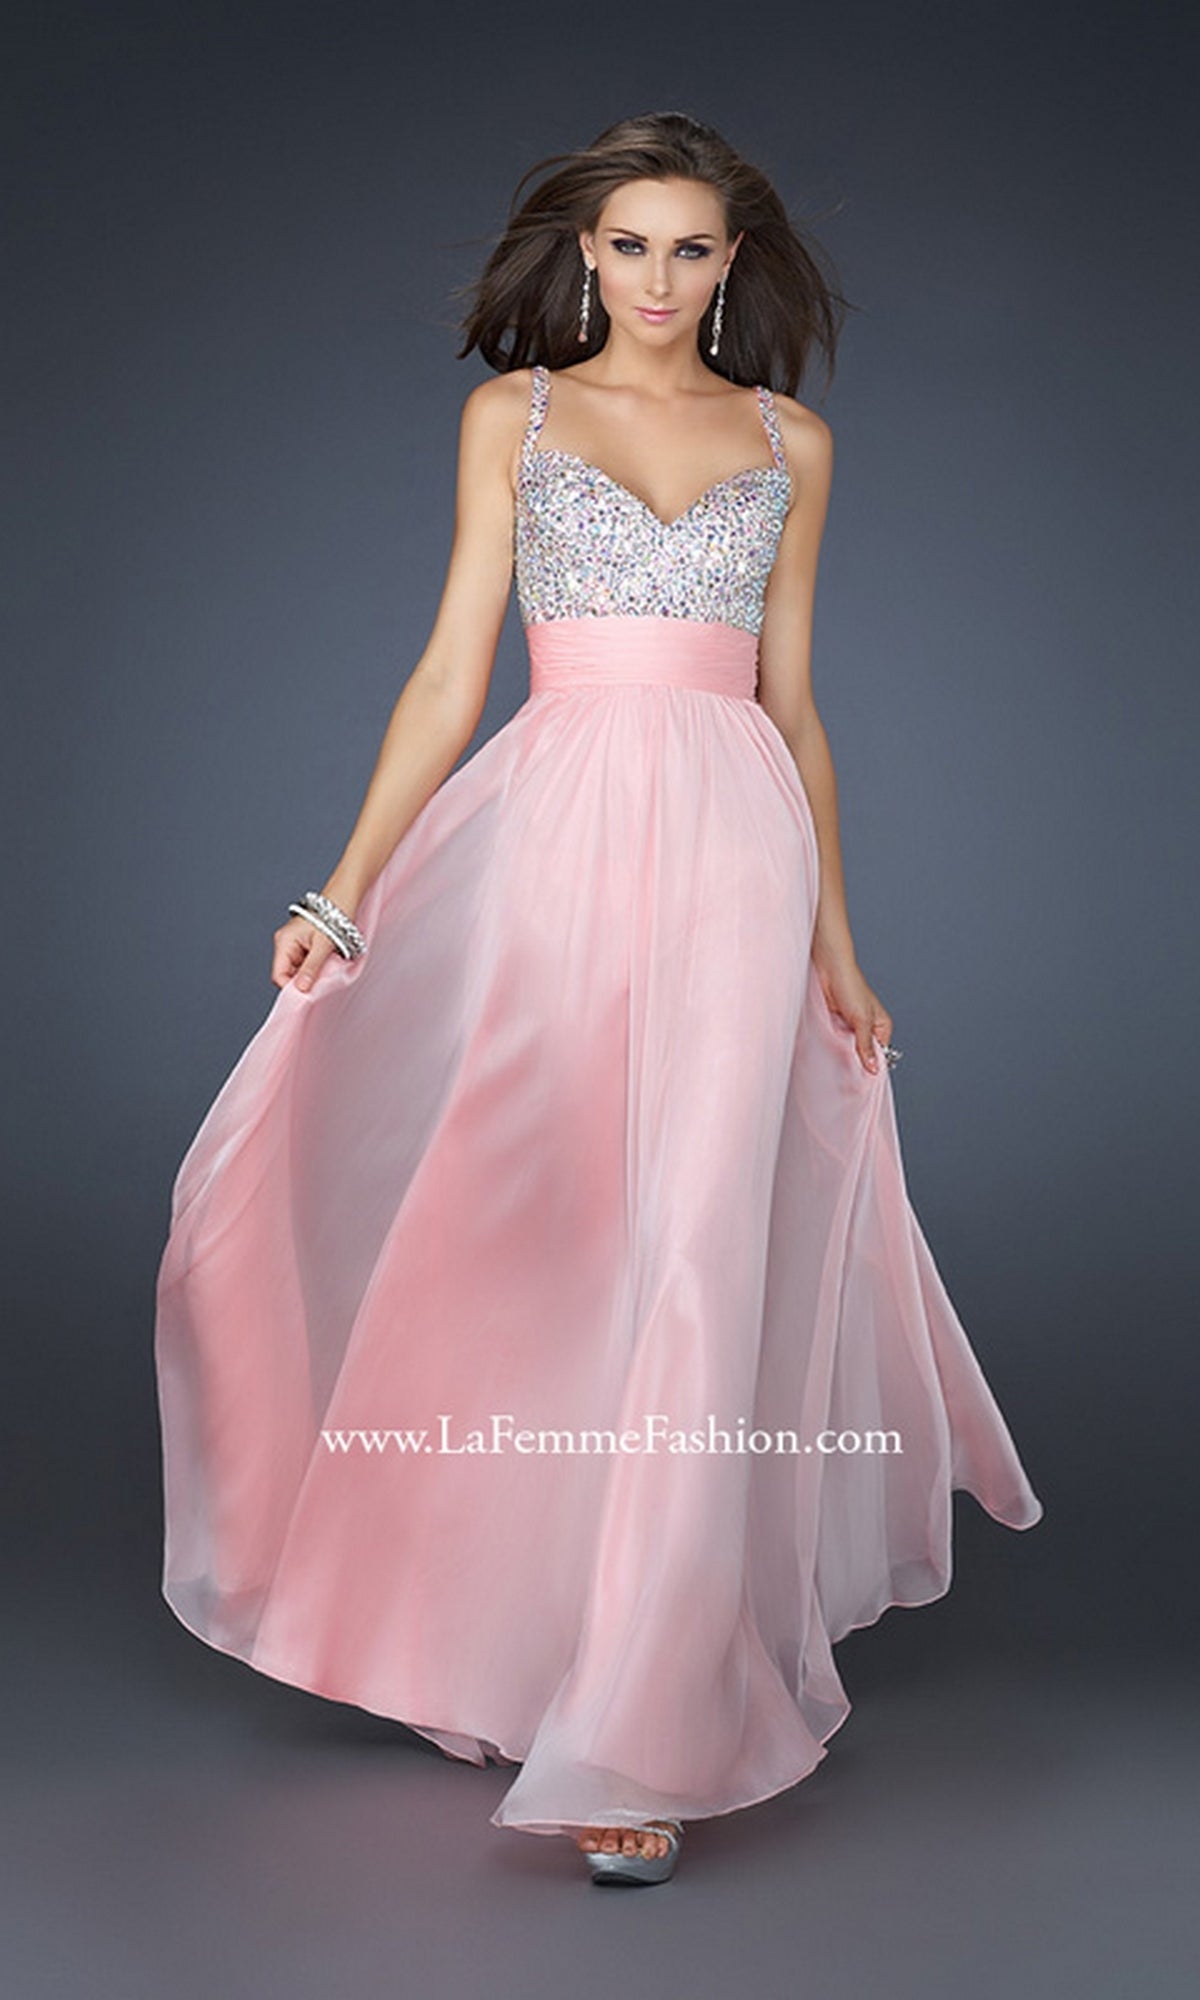 Cotton Candy Pink Long Formal La Femme Dress 16802